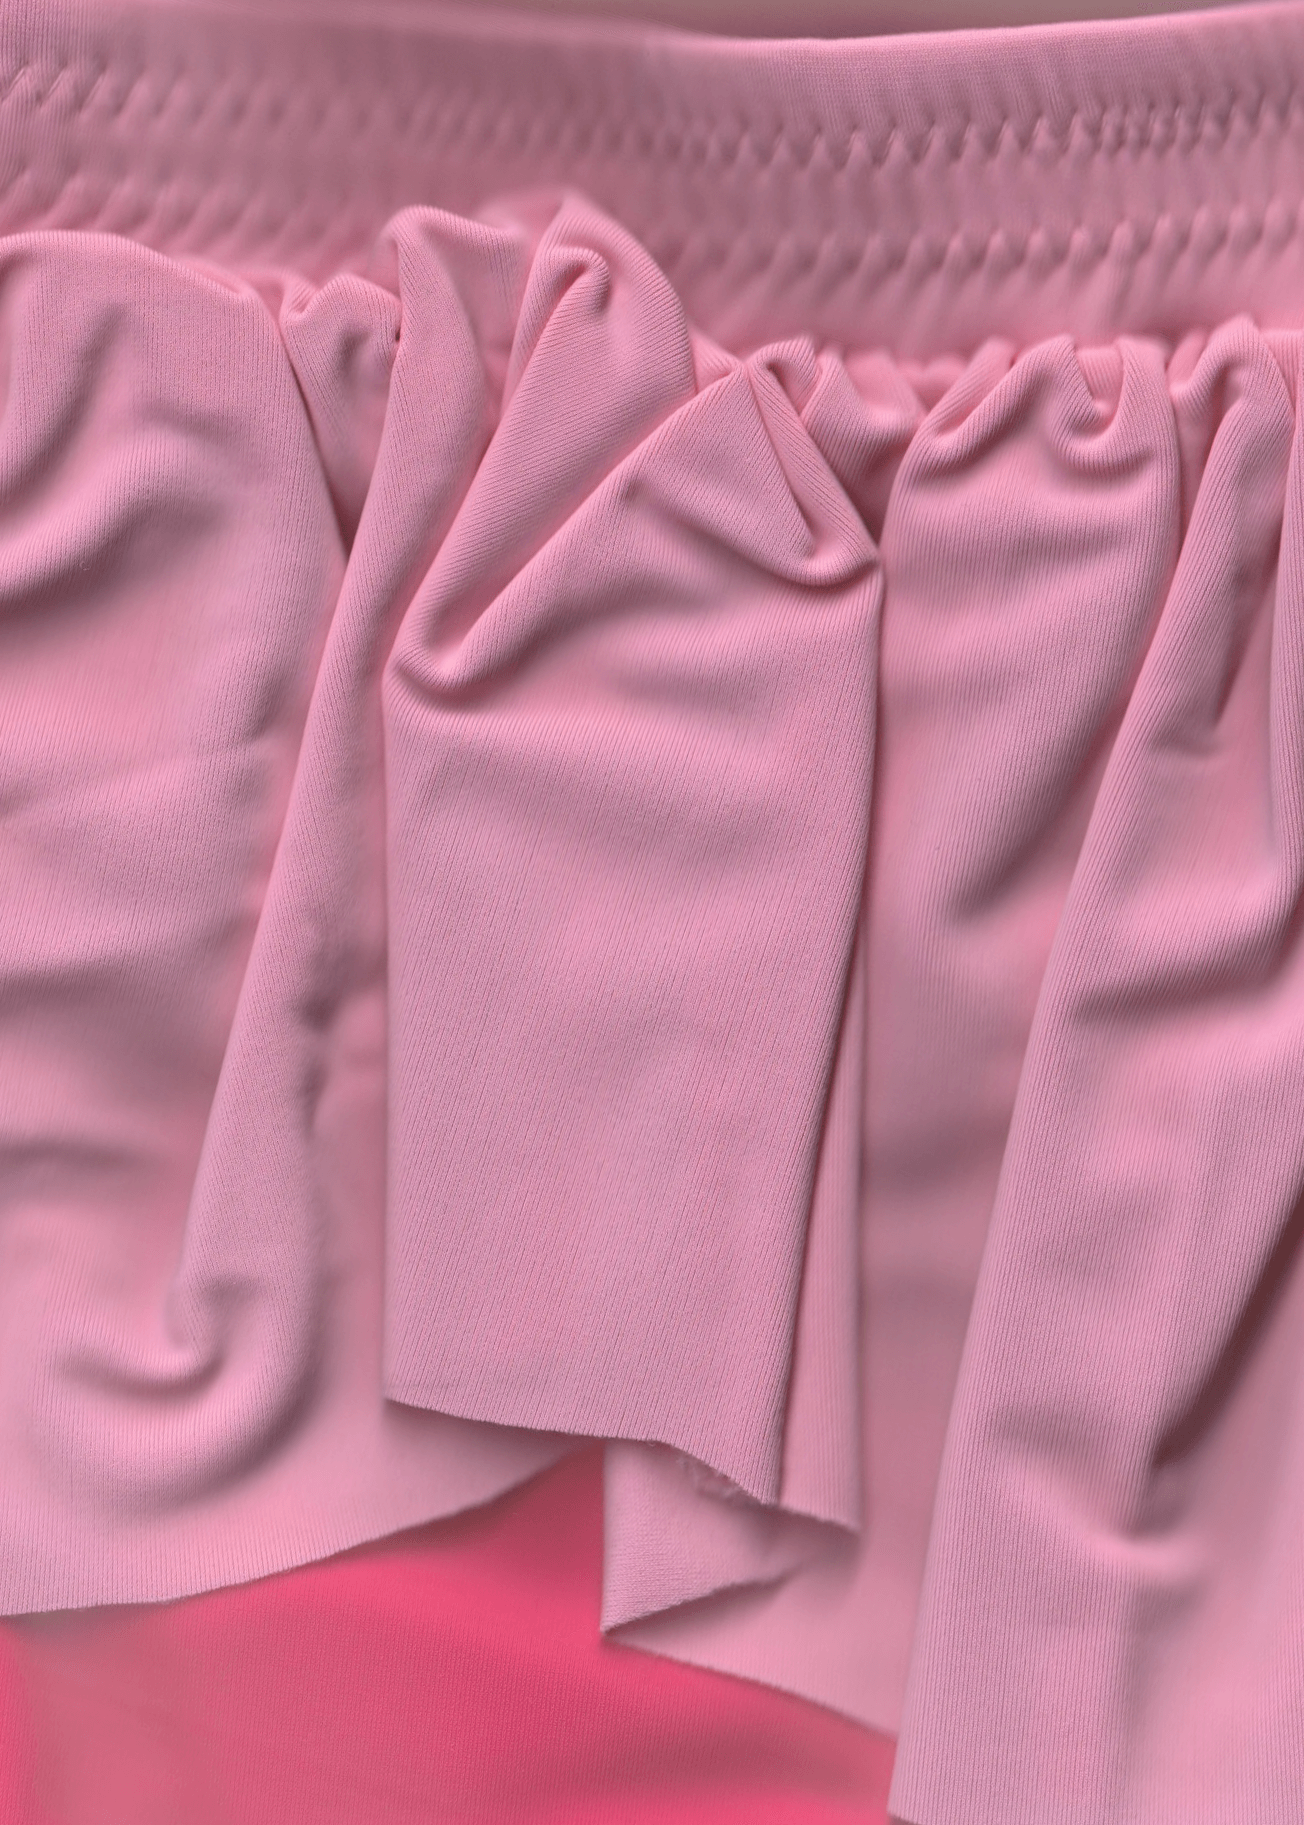 Capri skort - fuschia/baby pink